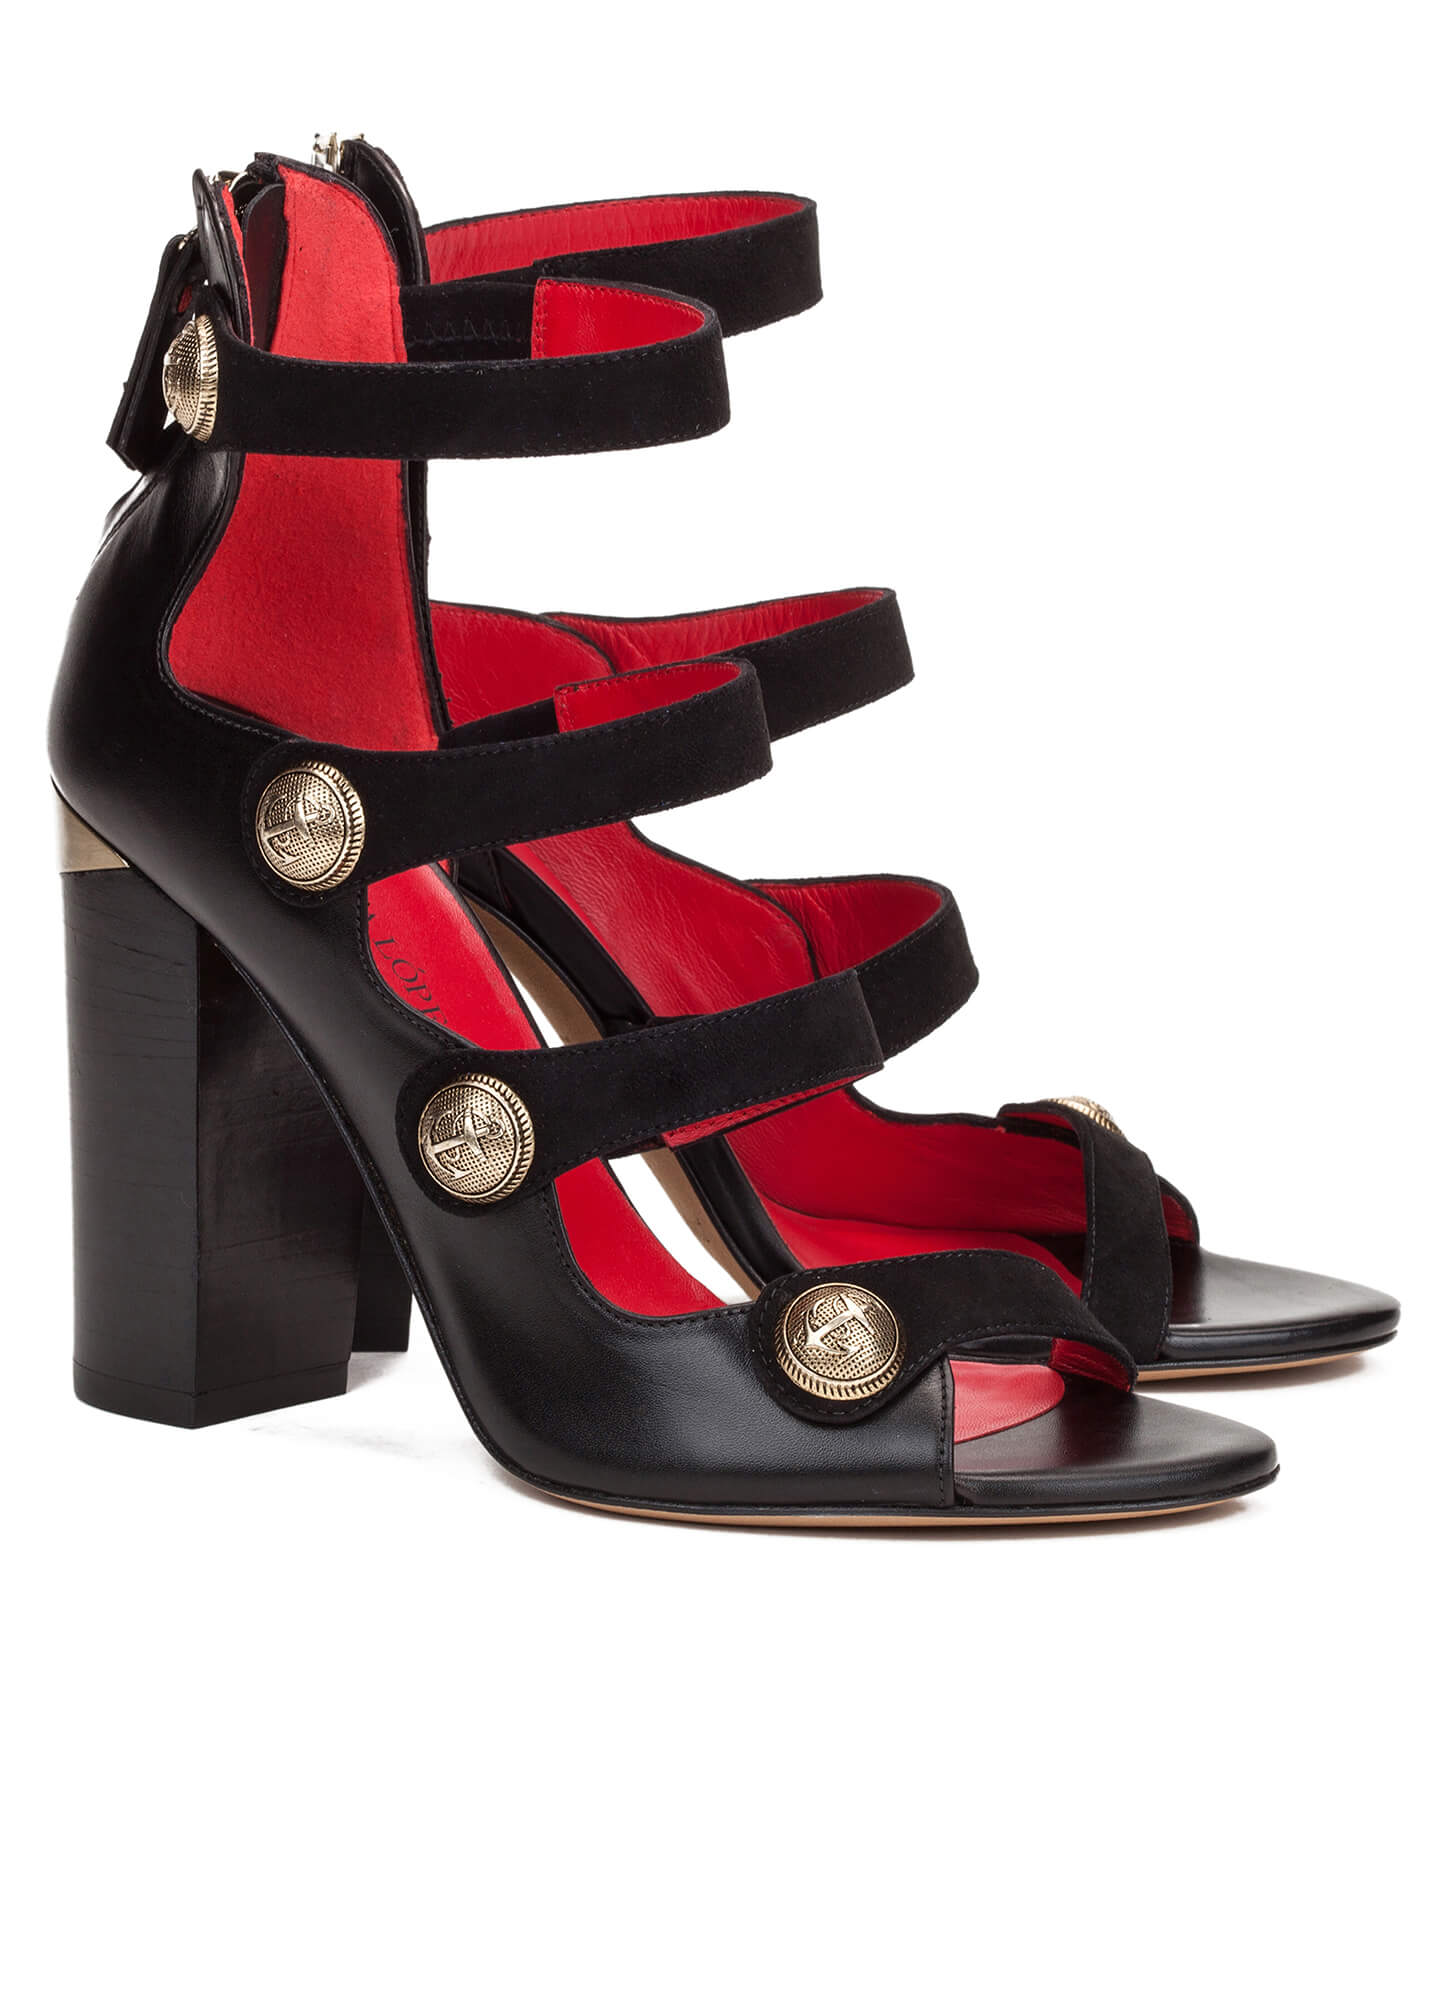 High heel sandals with metal buttons - online shoe store Pura Lopez ...